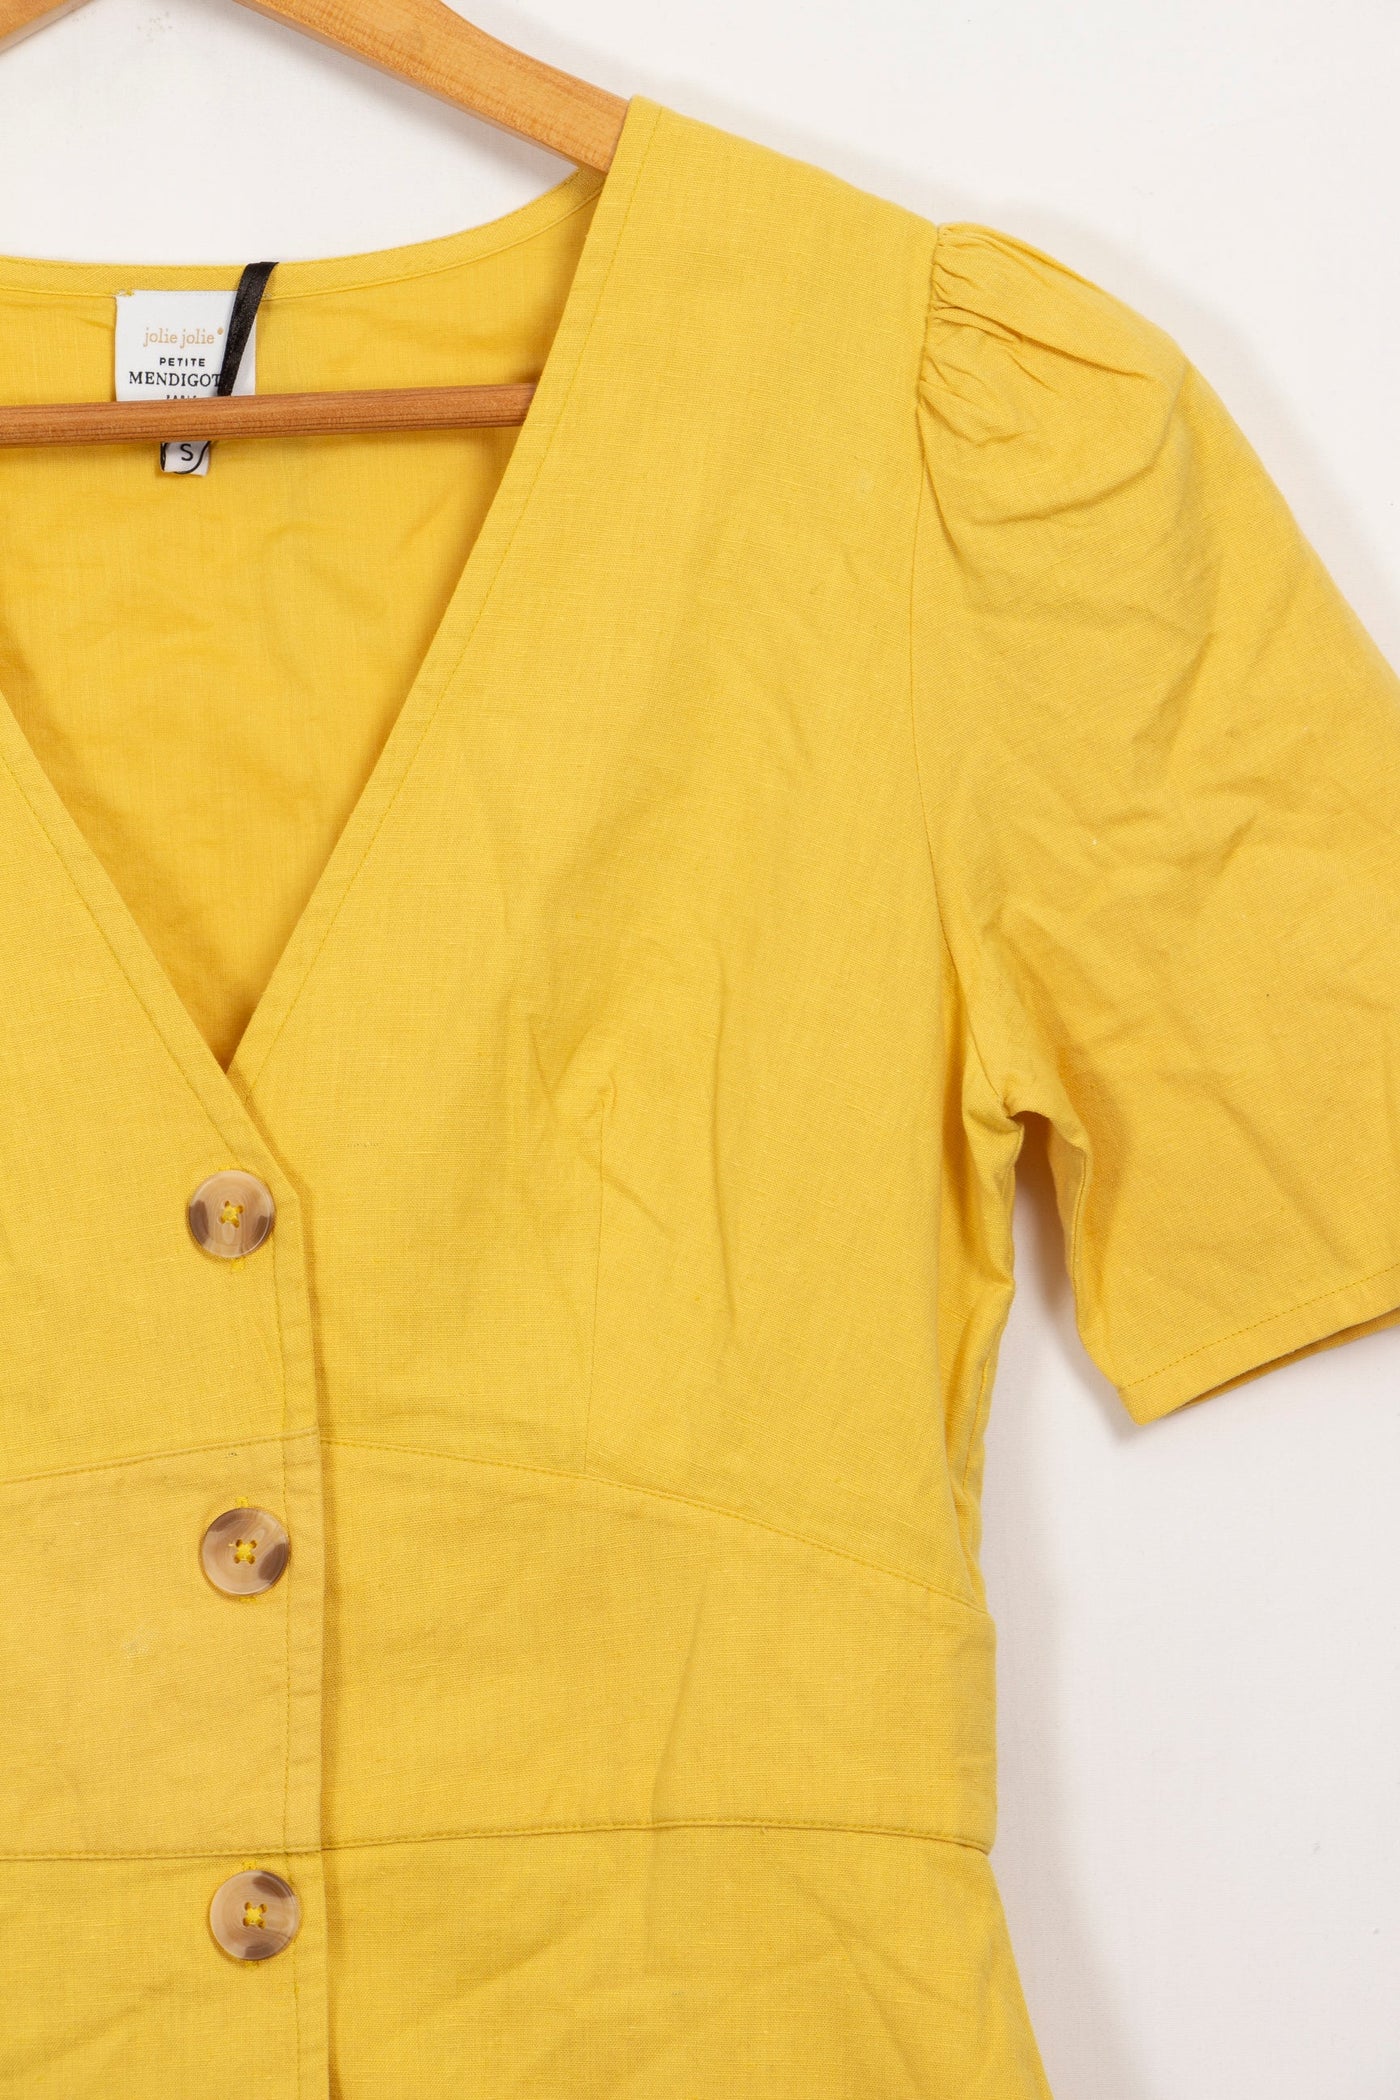 Robe jaune avec boutonnière Petite Mendigote - S